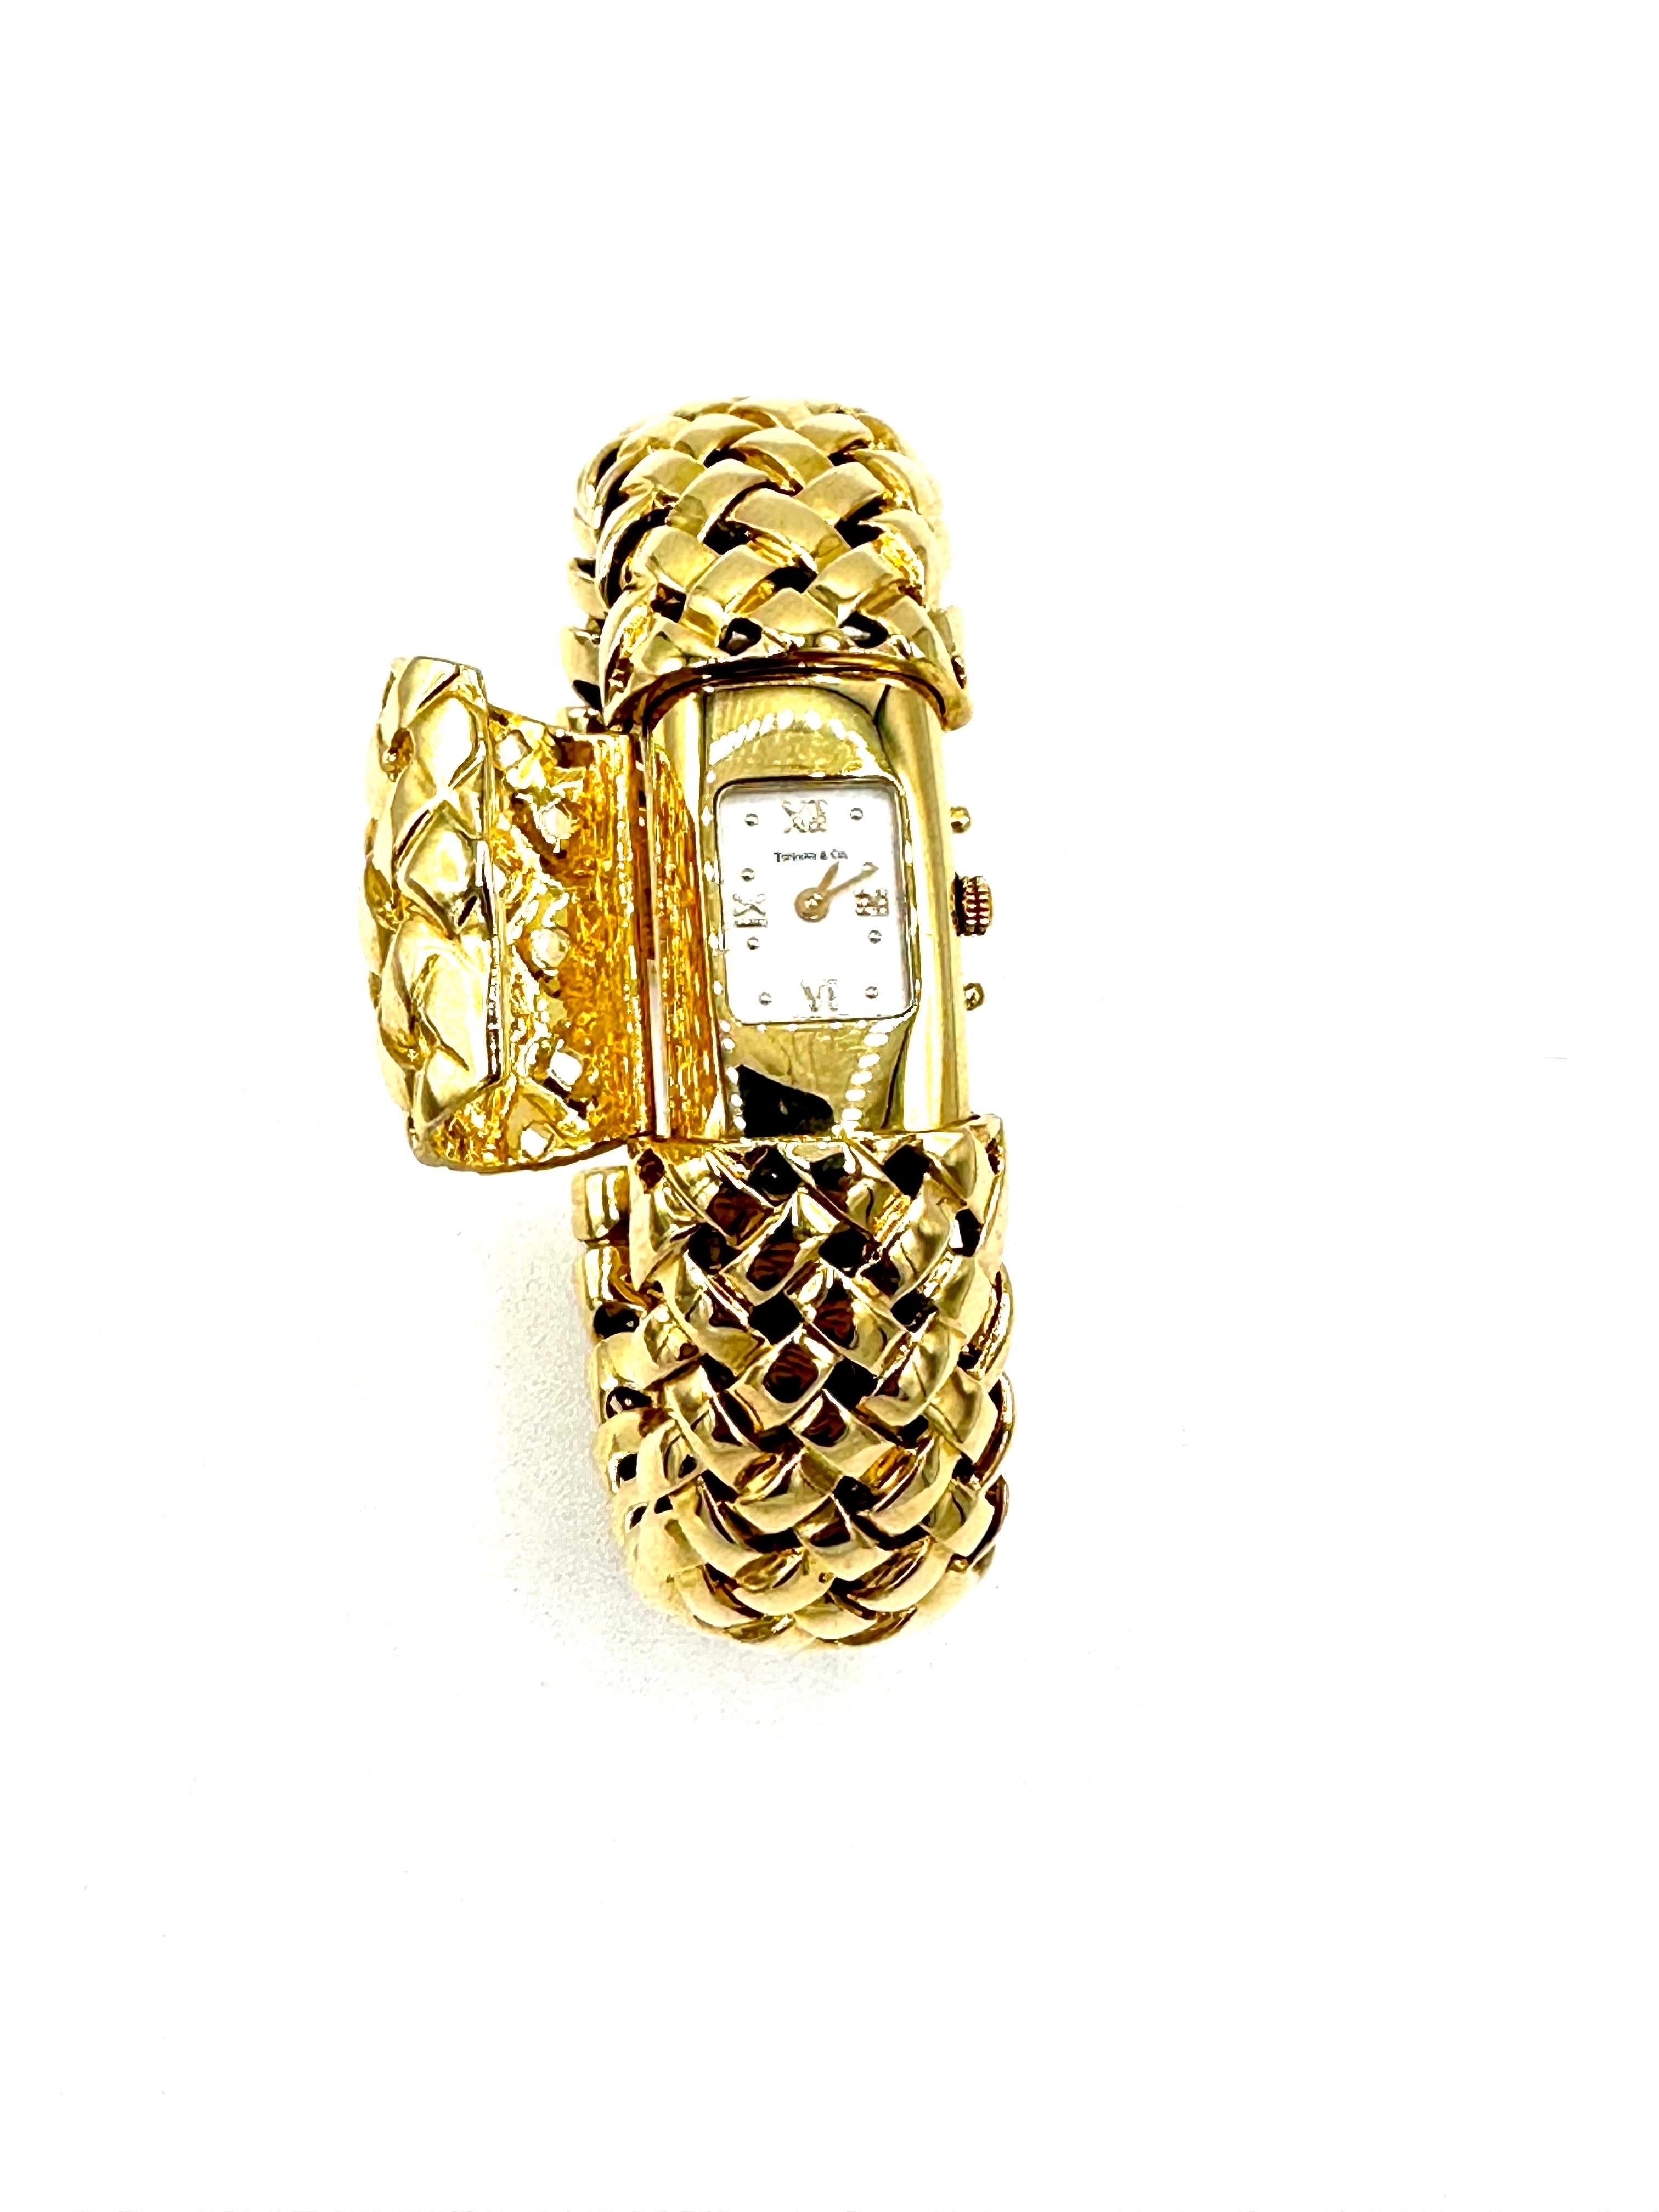 Modern Tiffany & Co. 18k Yellow Gold Basket Weave Bangle Bracelet Watch For Sale